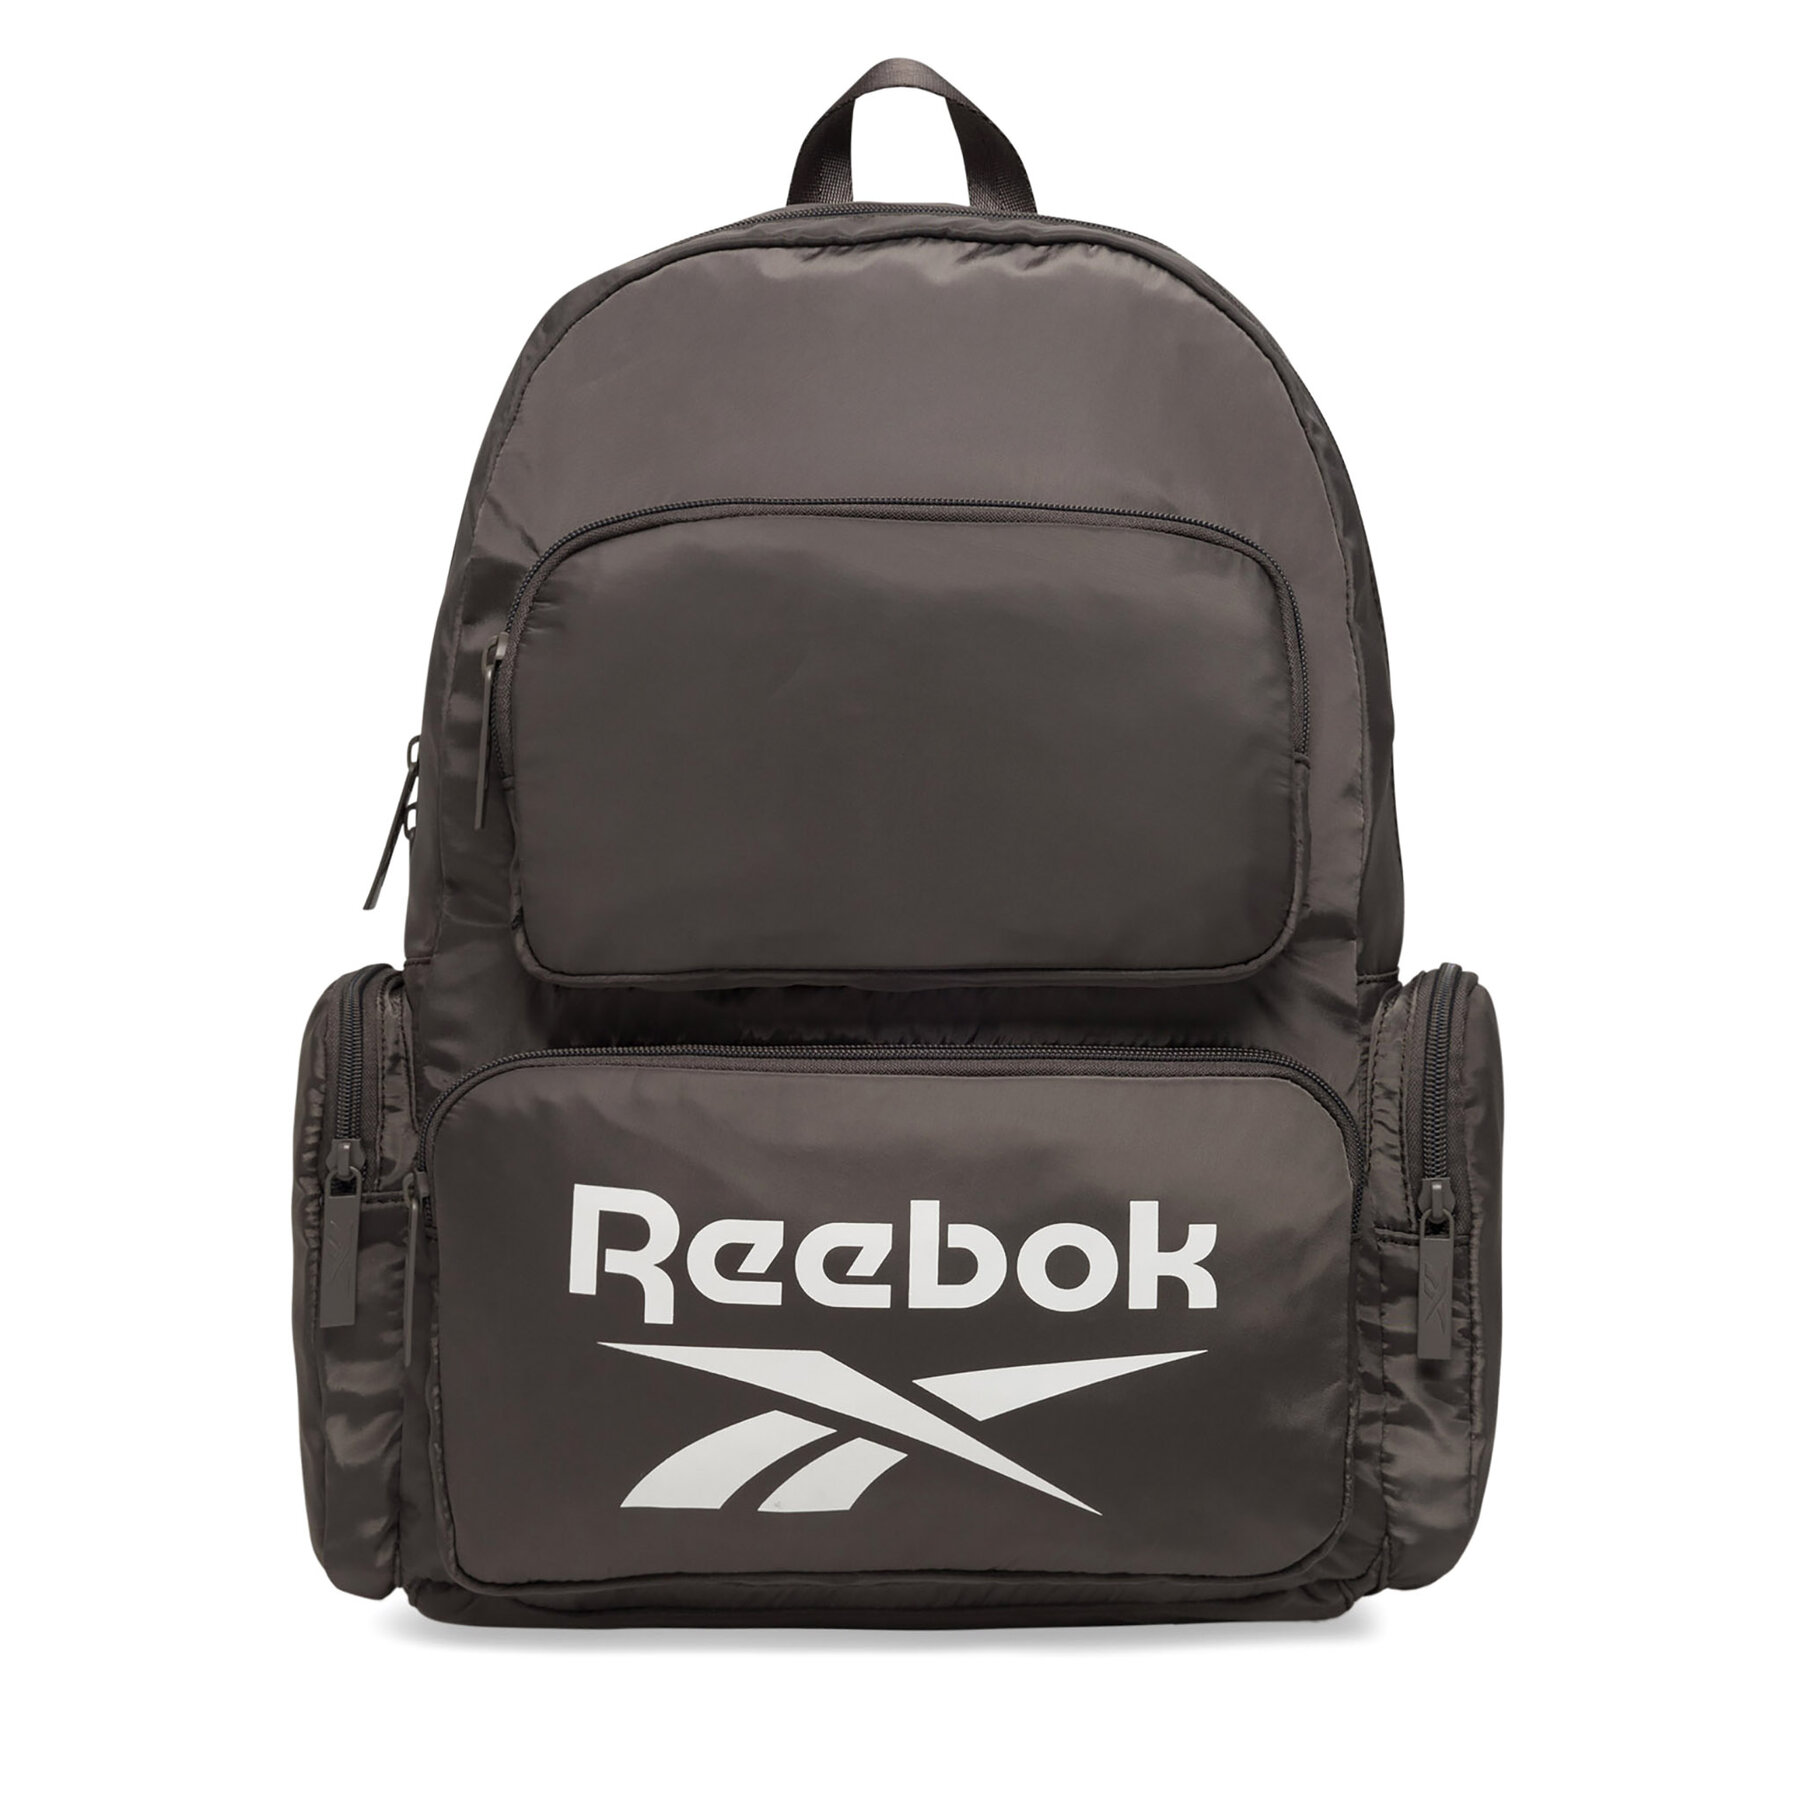 Rucksack Reebok RBK-033-CCC-05 Grau von Reebok